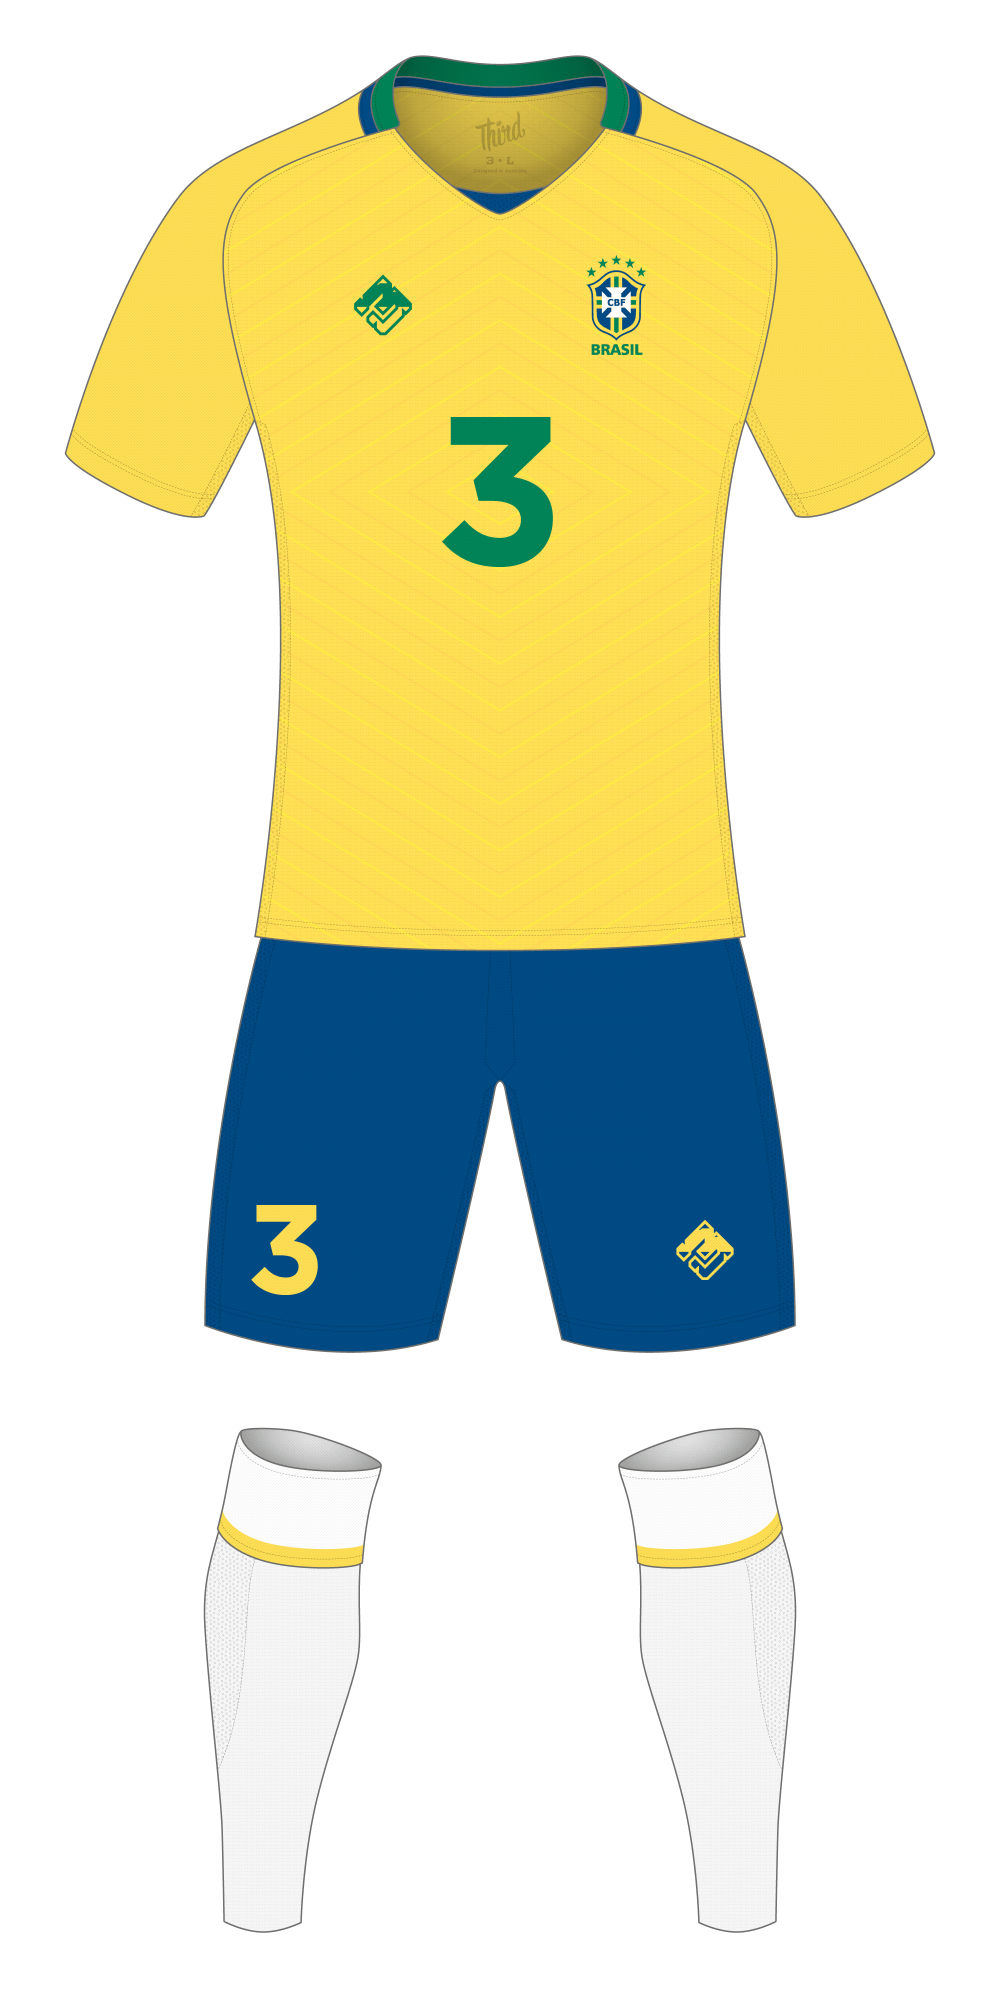 Brazil World Cup 2018 concept